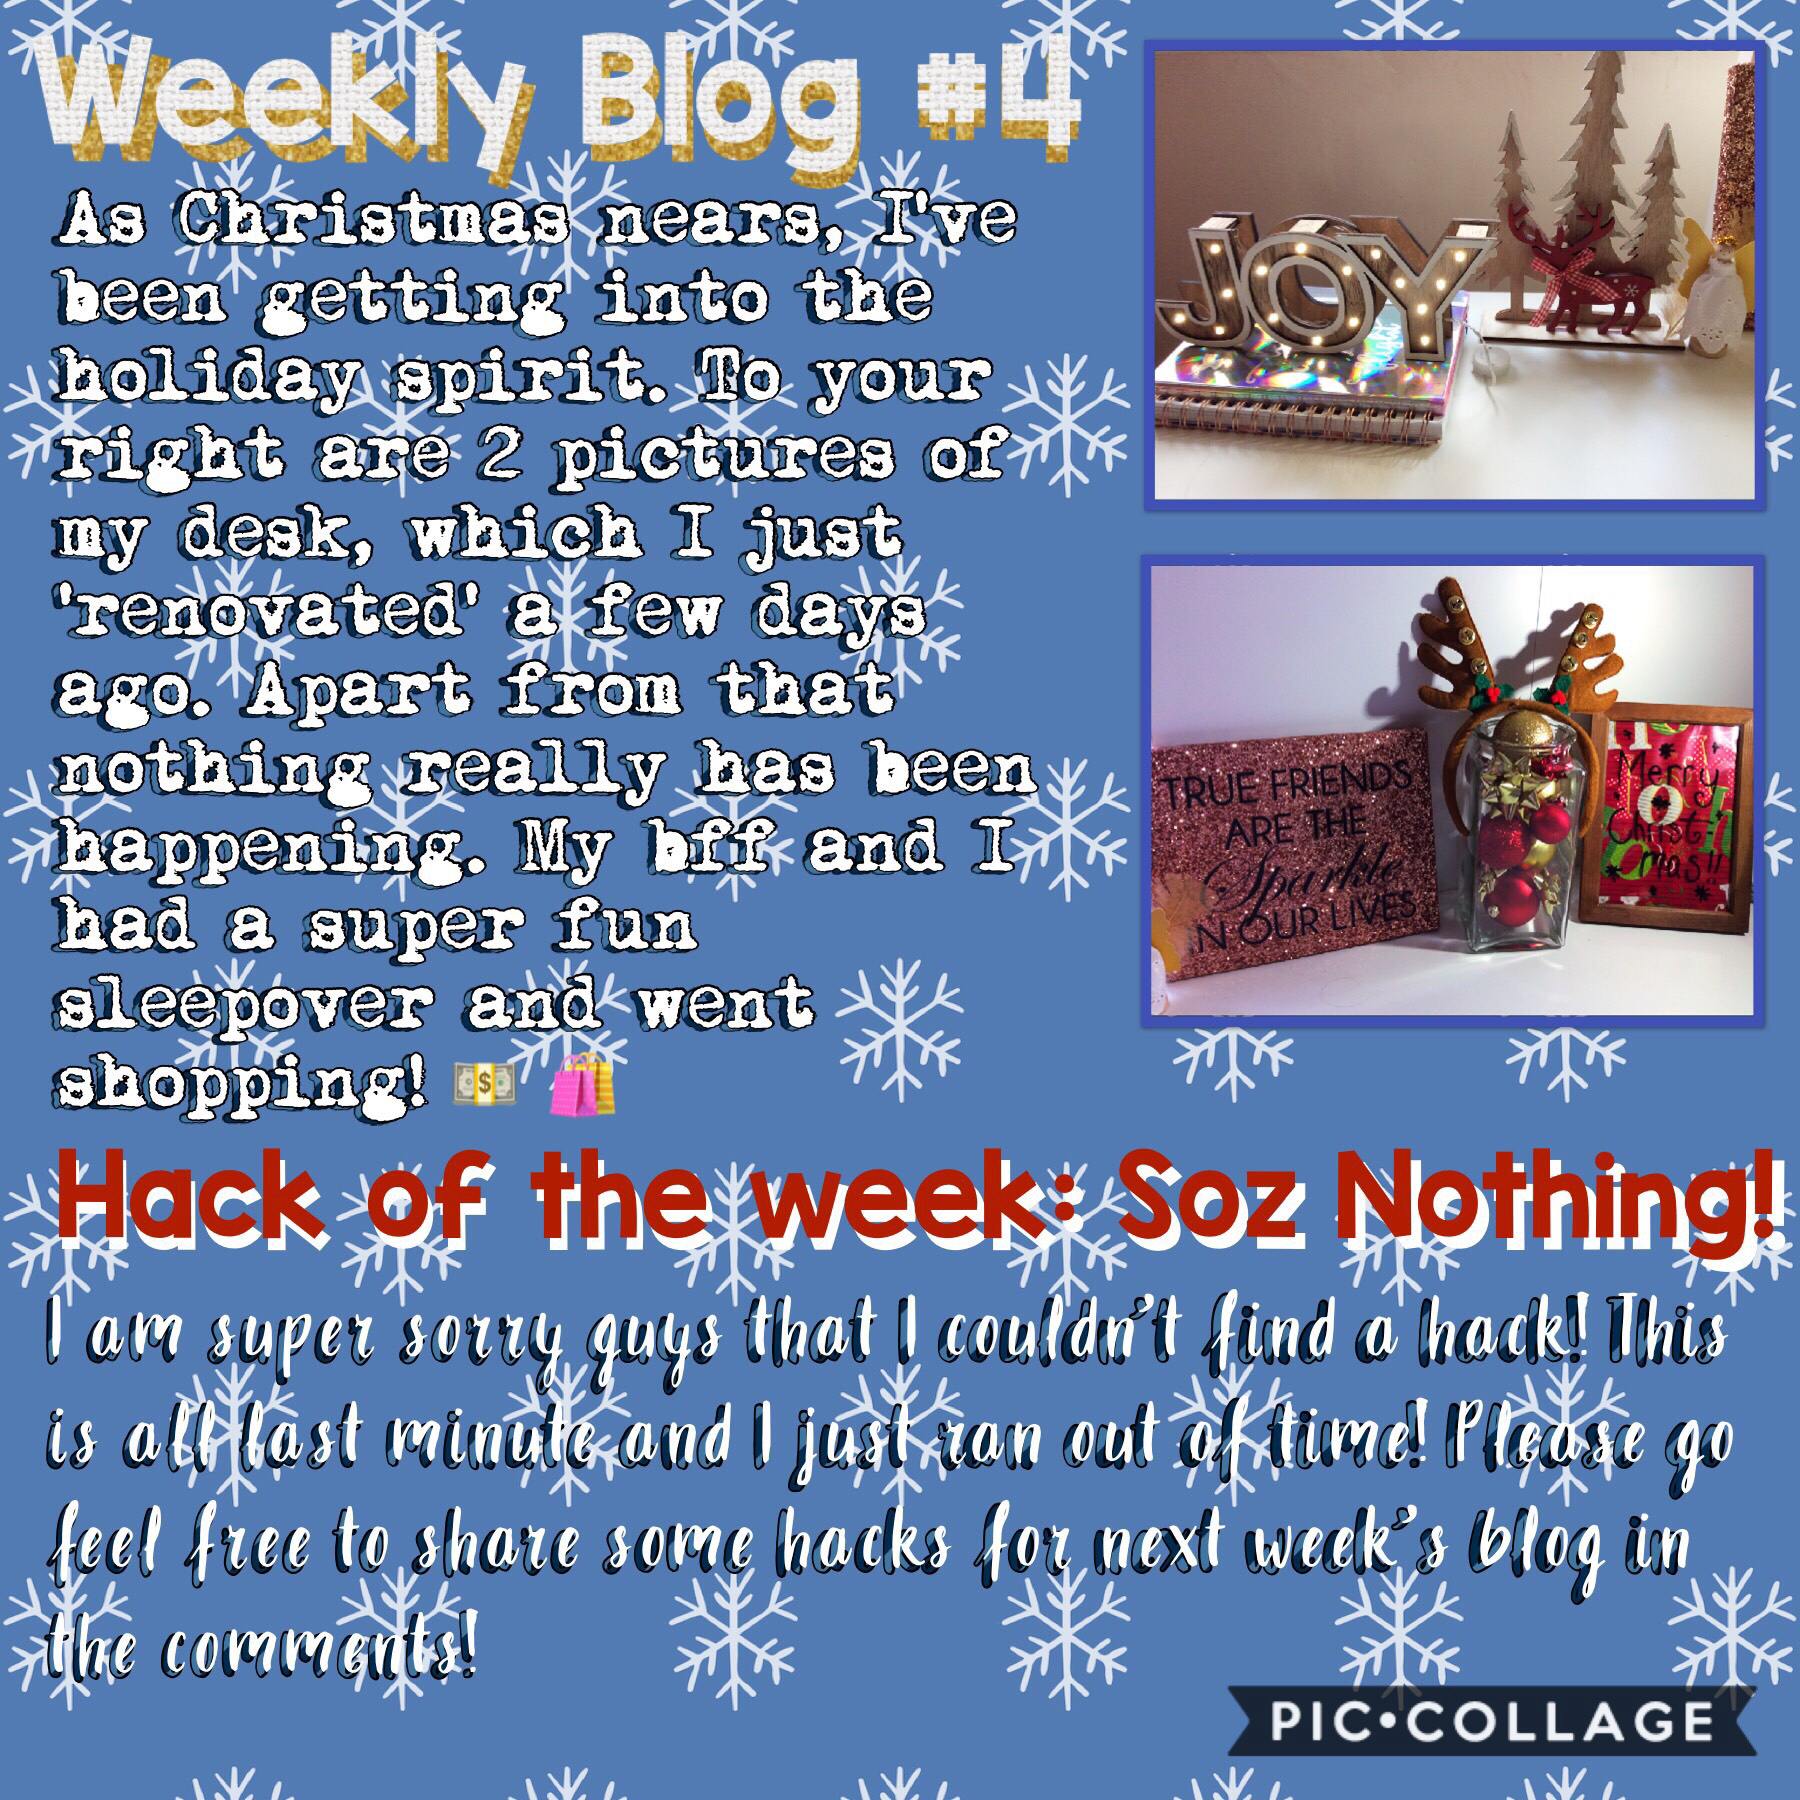 ❄️ Weekly Blog #4! Soz for no hack this week! ❄️ 
2/12/18